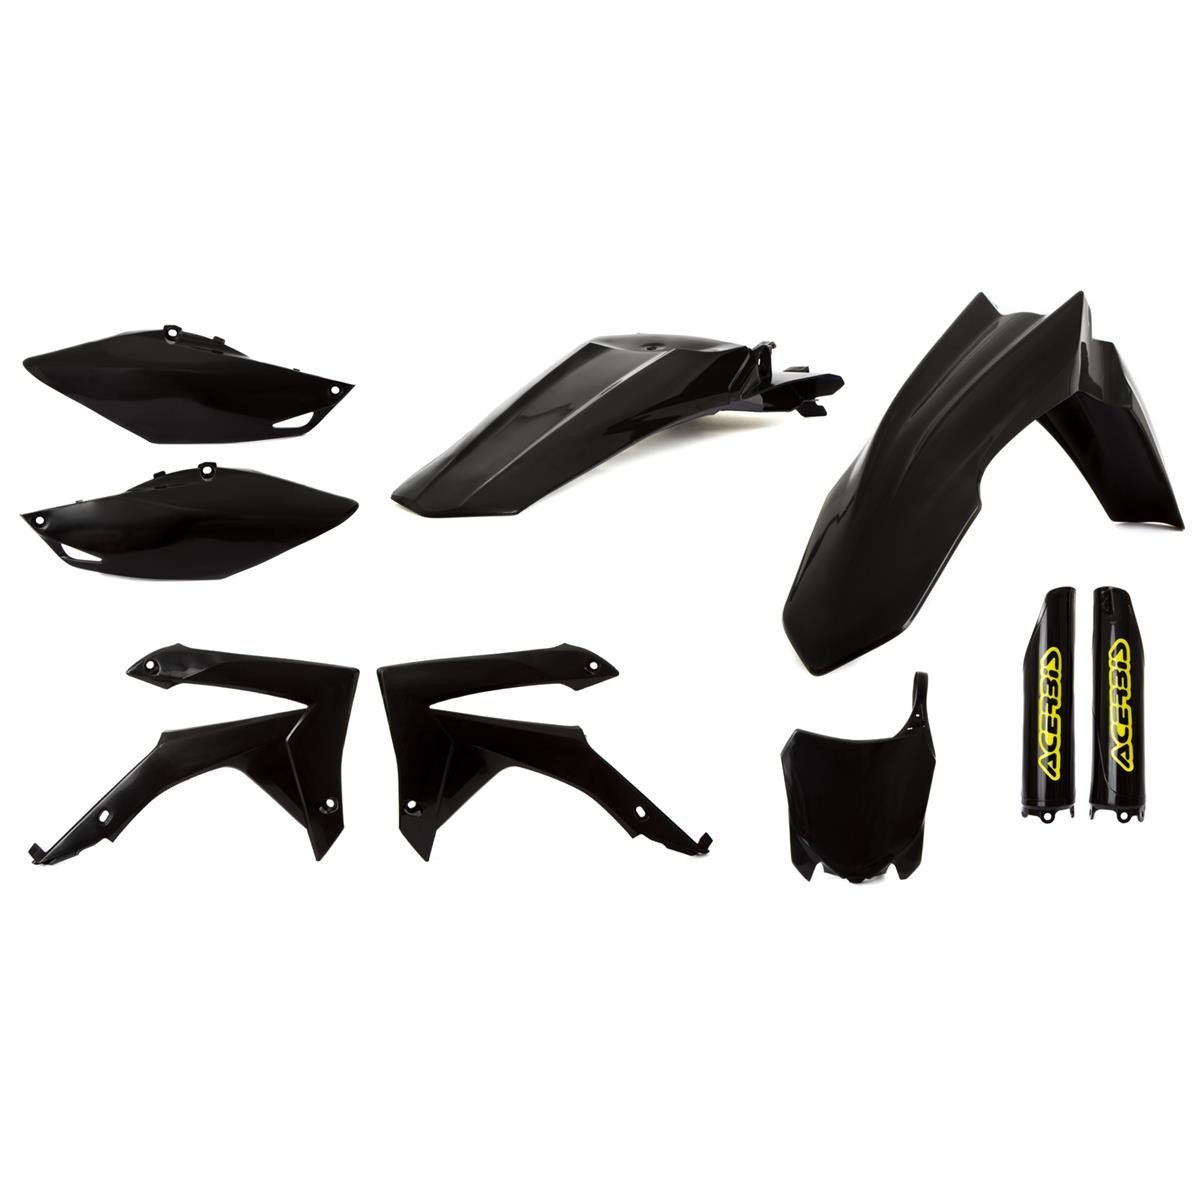 Acerbis Kit Plastique complet Full-Kit Honda CRF 250 14-17, CRF 450 13-16, Noir